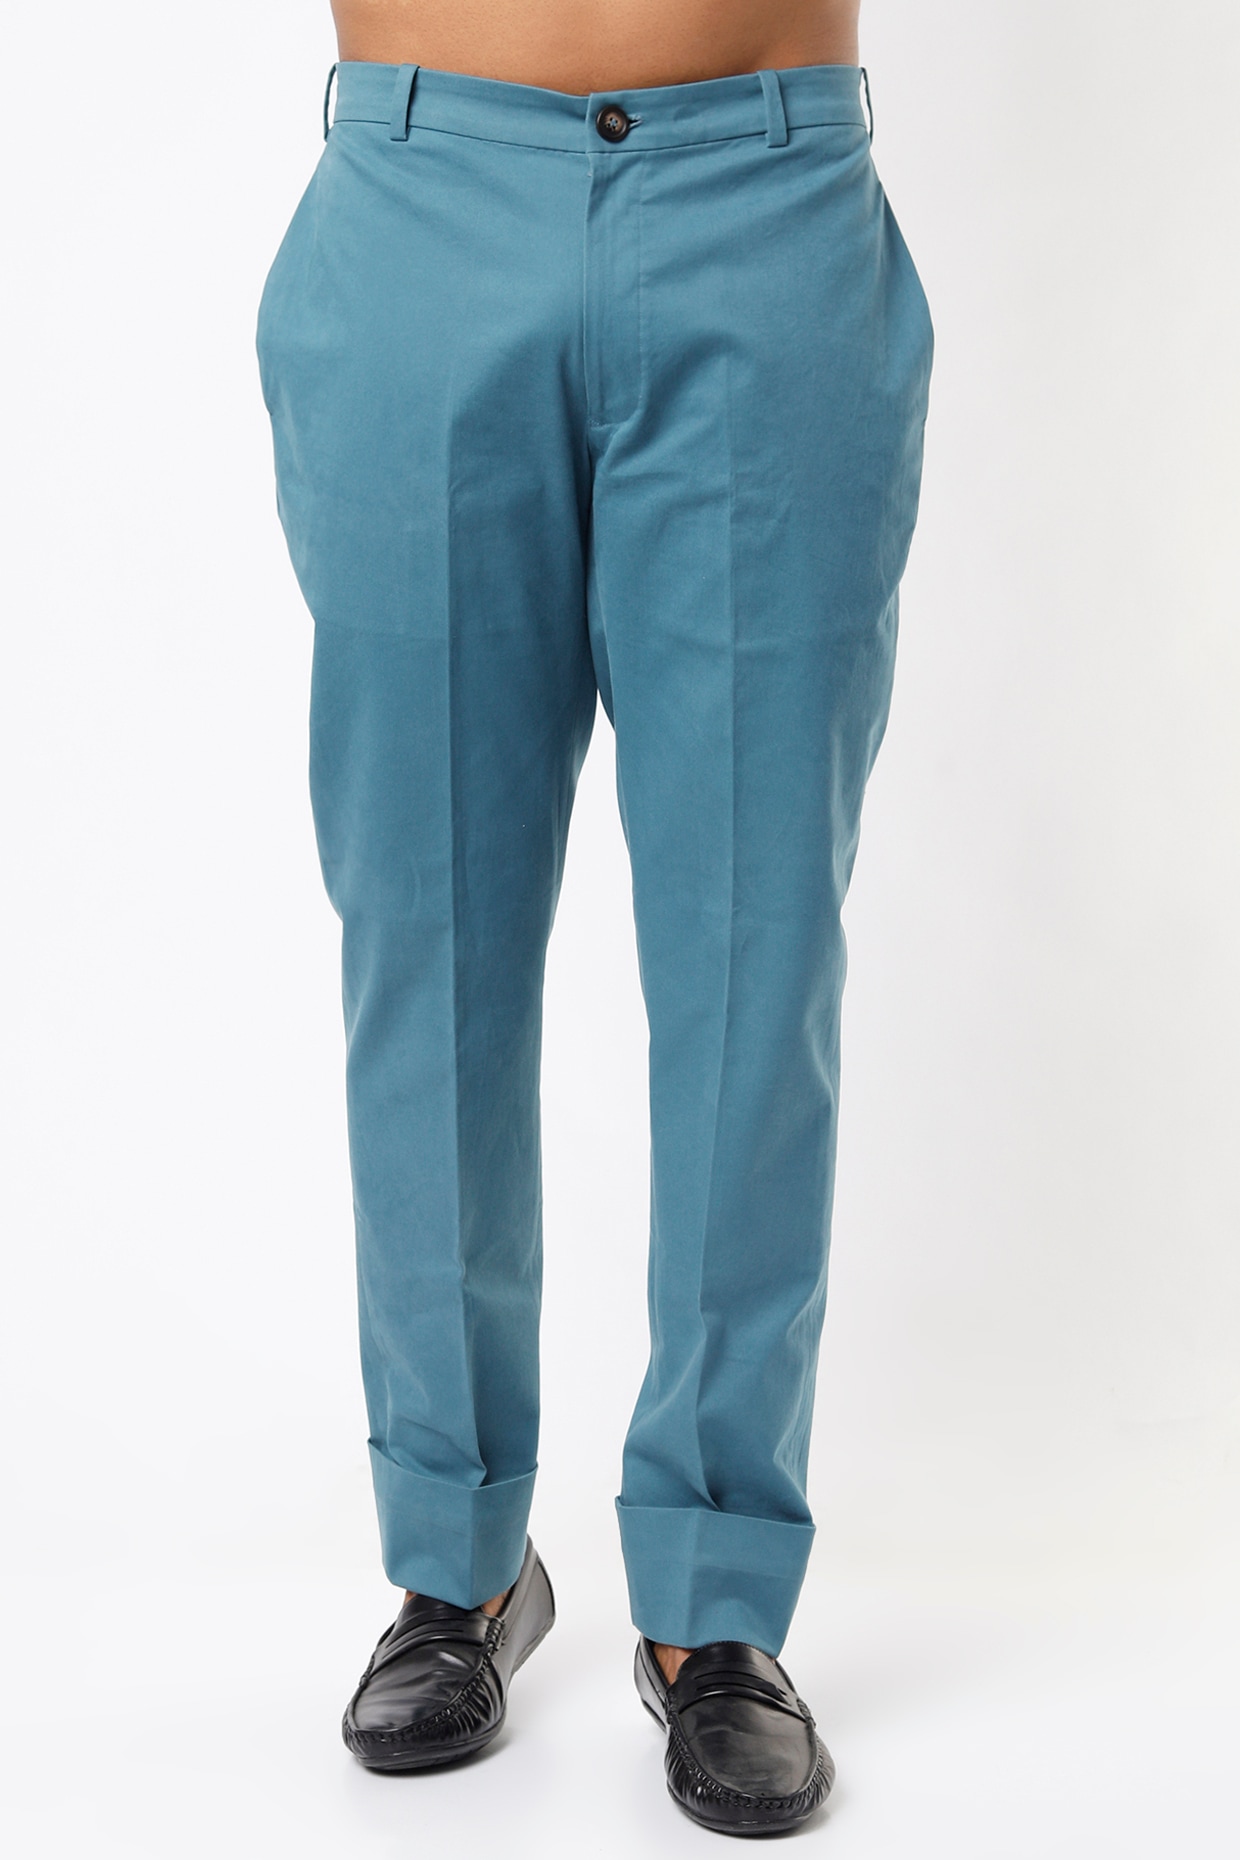 For freelance designs call or whatsapp on 8779182352 | Jean pocket designs, Mens  jeans pockets, Denim jeans men